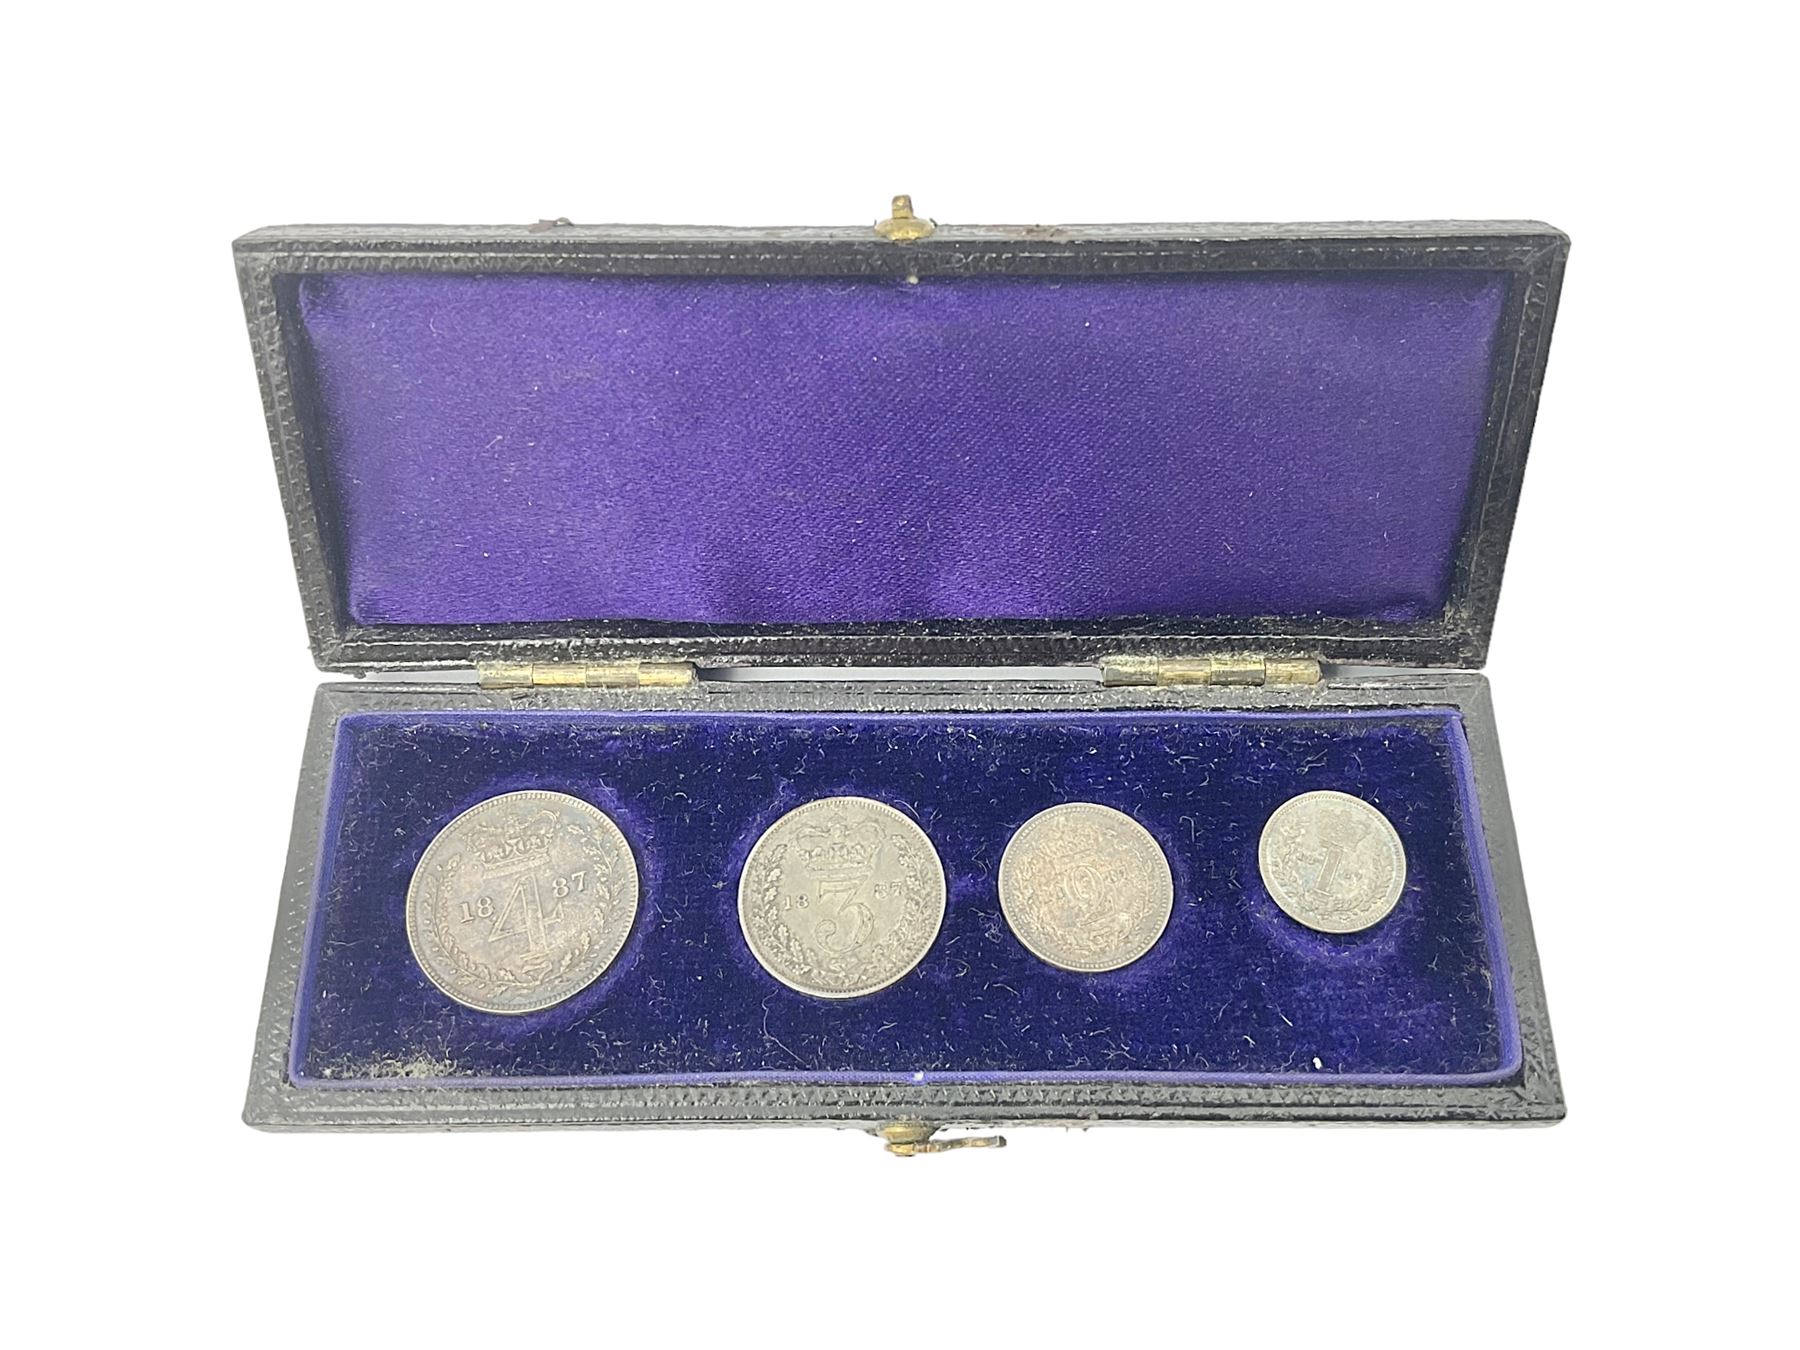 Queen Victoria 1887 maundy coin set